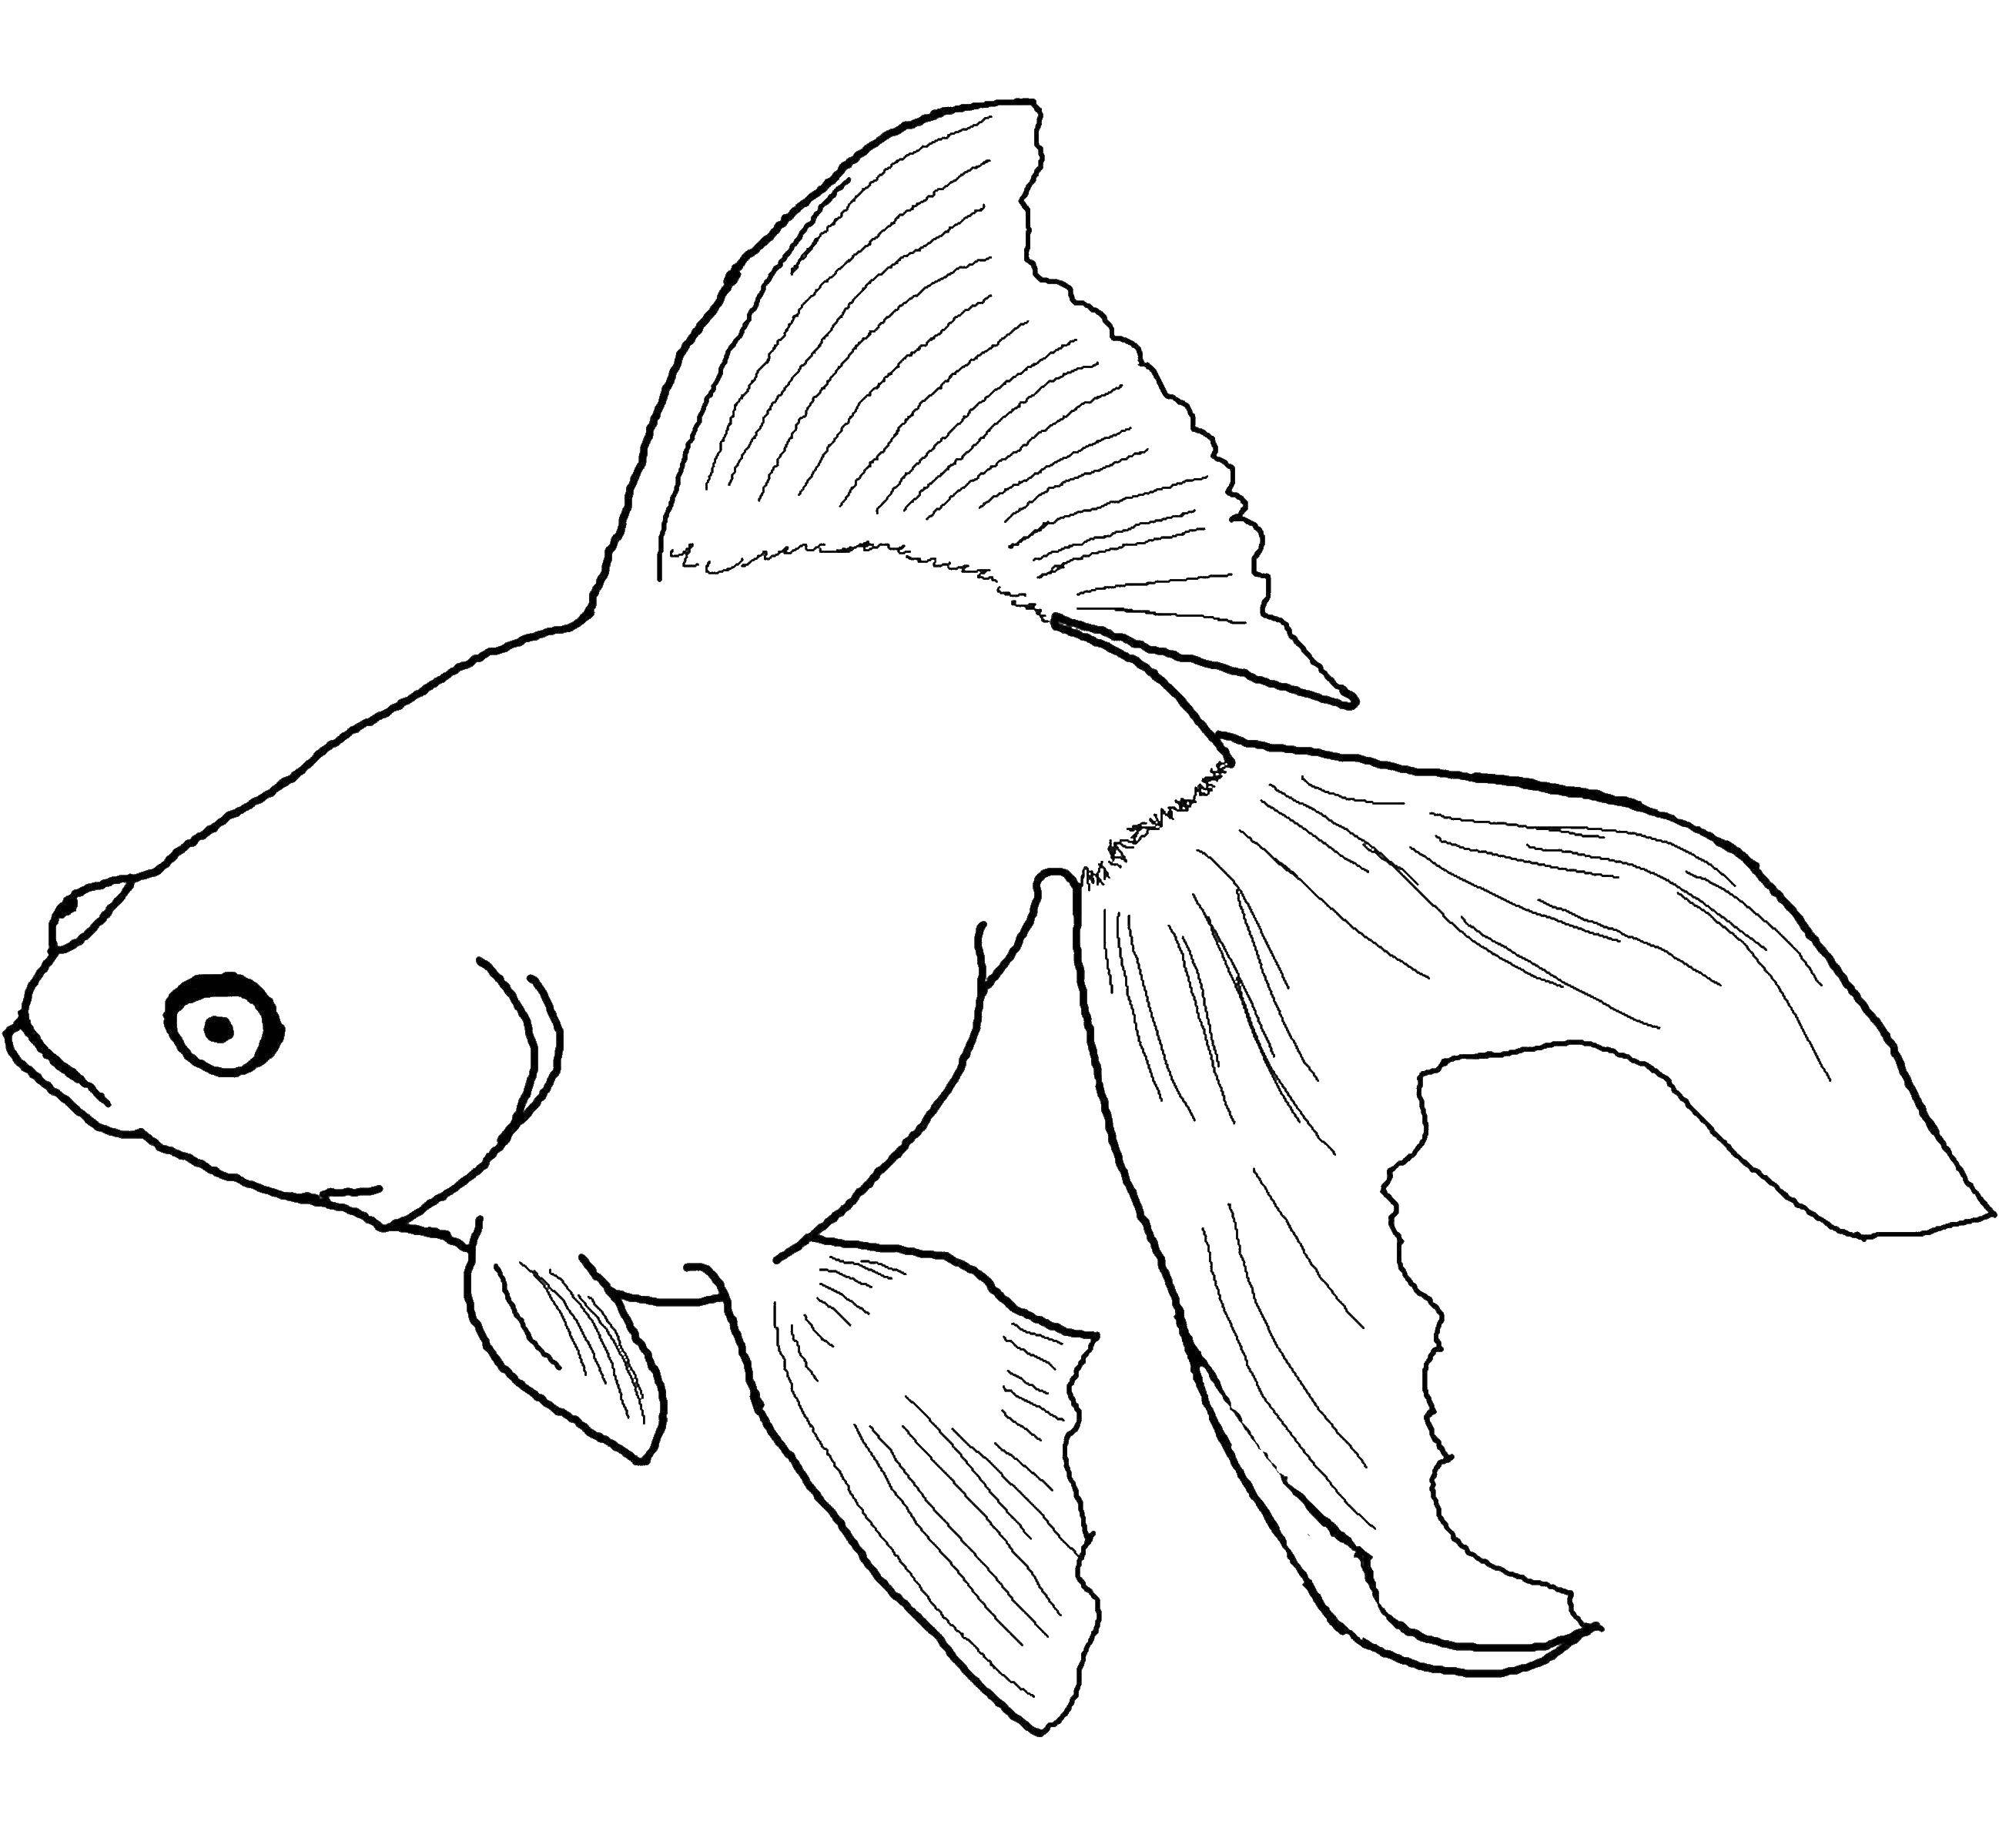 Название: Раскраска Рыбка. Категория: рыбы. Теги: рыбки, море.